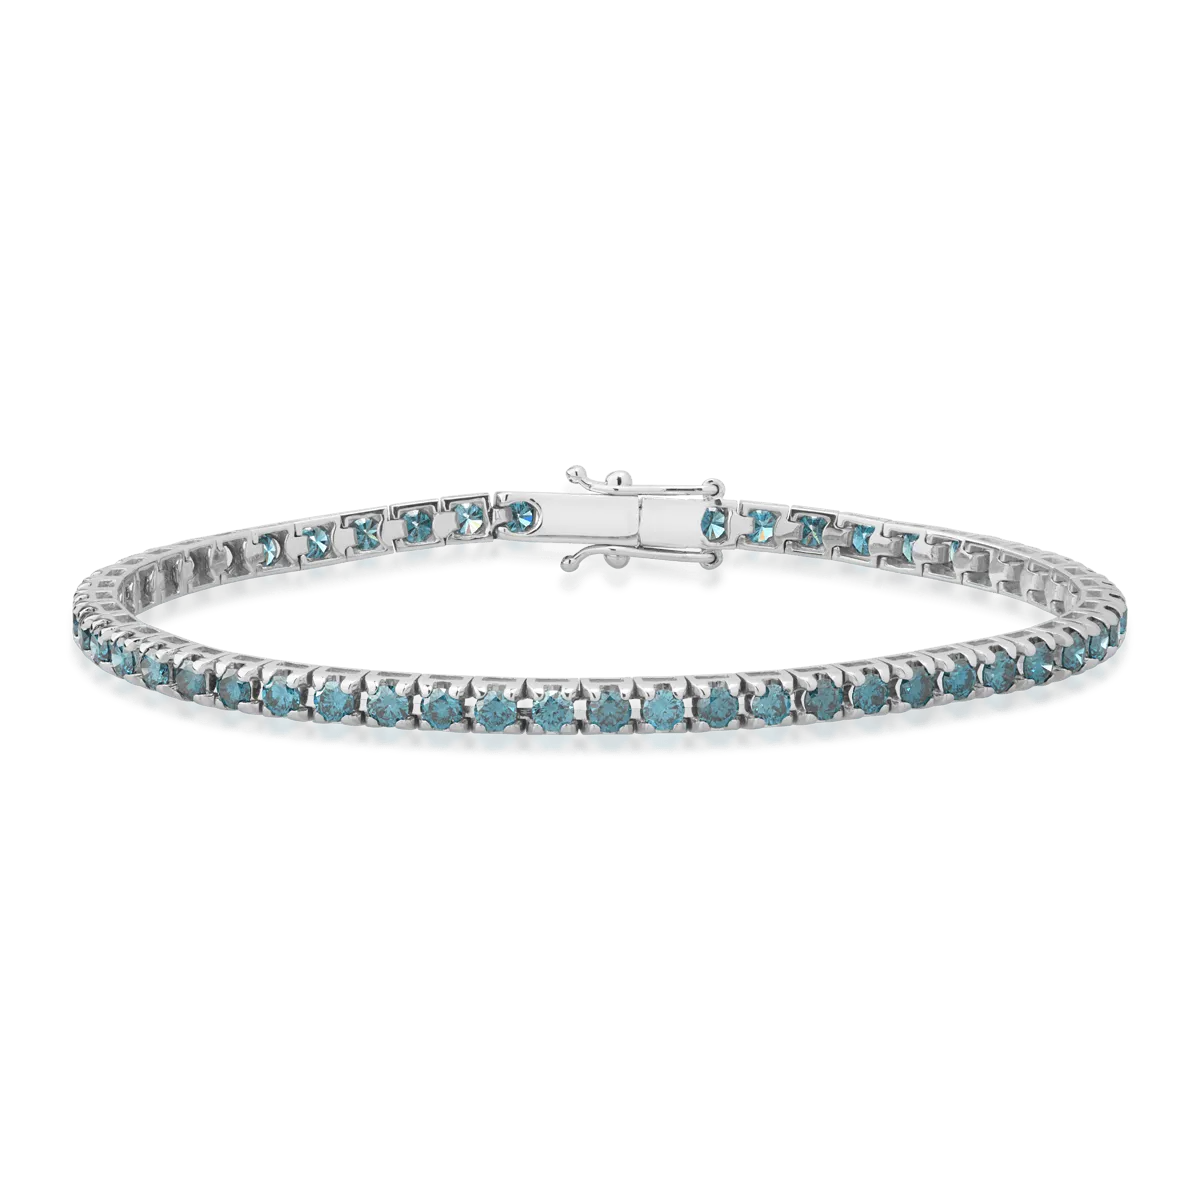 18K white gold tennis bracelet with blue diamonds of 1.9ct